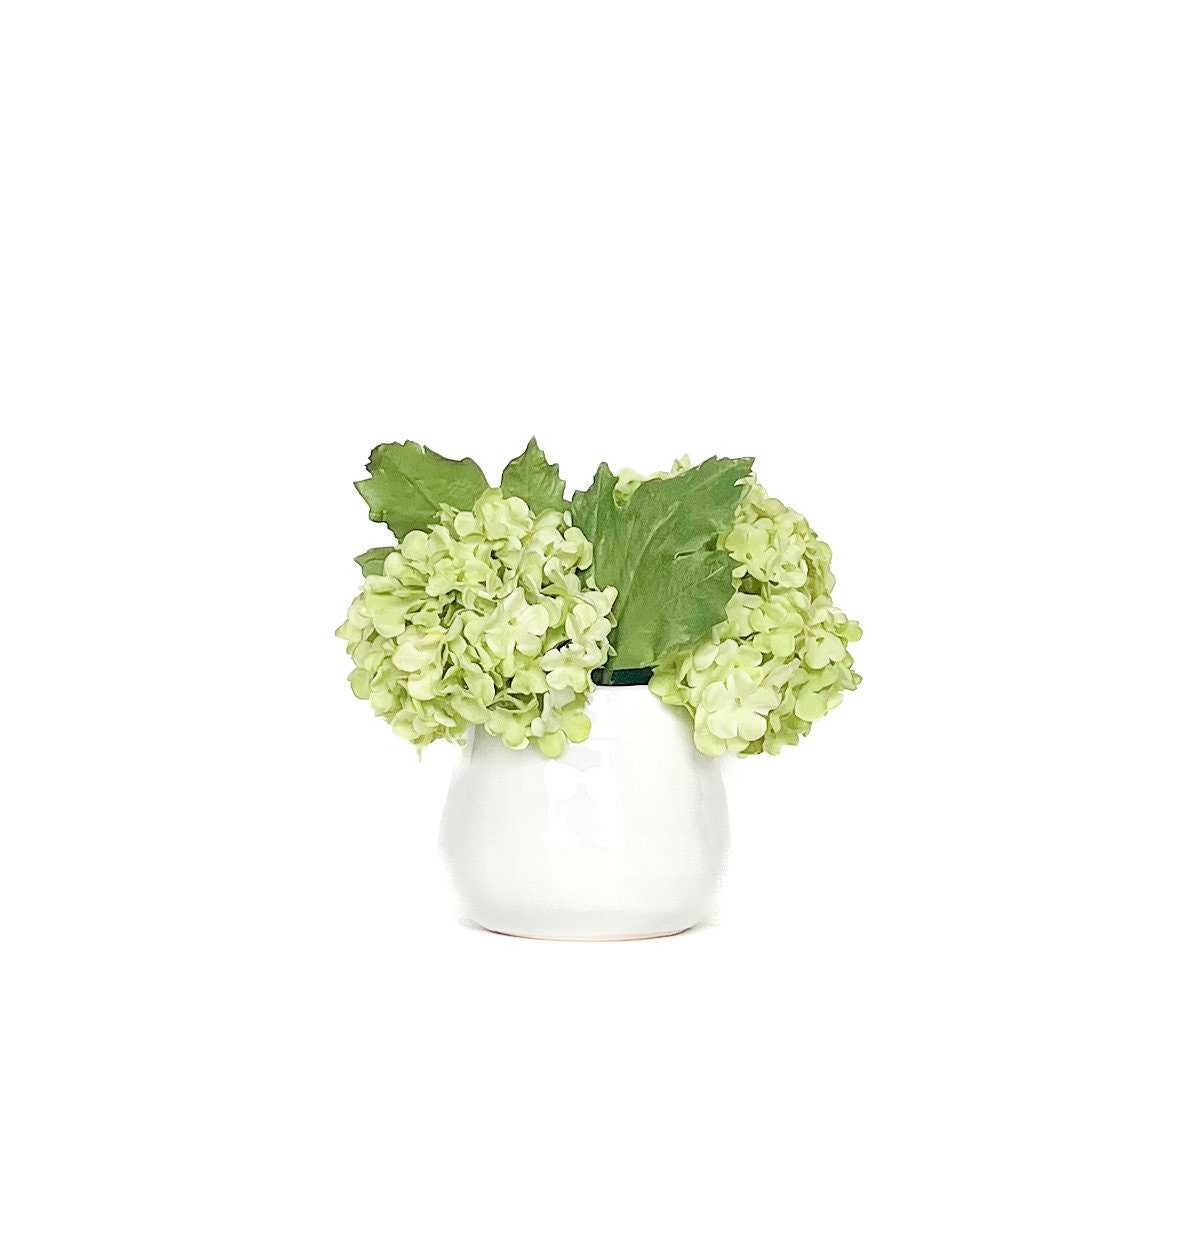 Image of Snowball hydrangea in vase